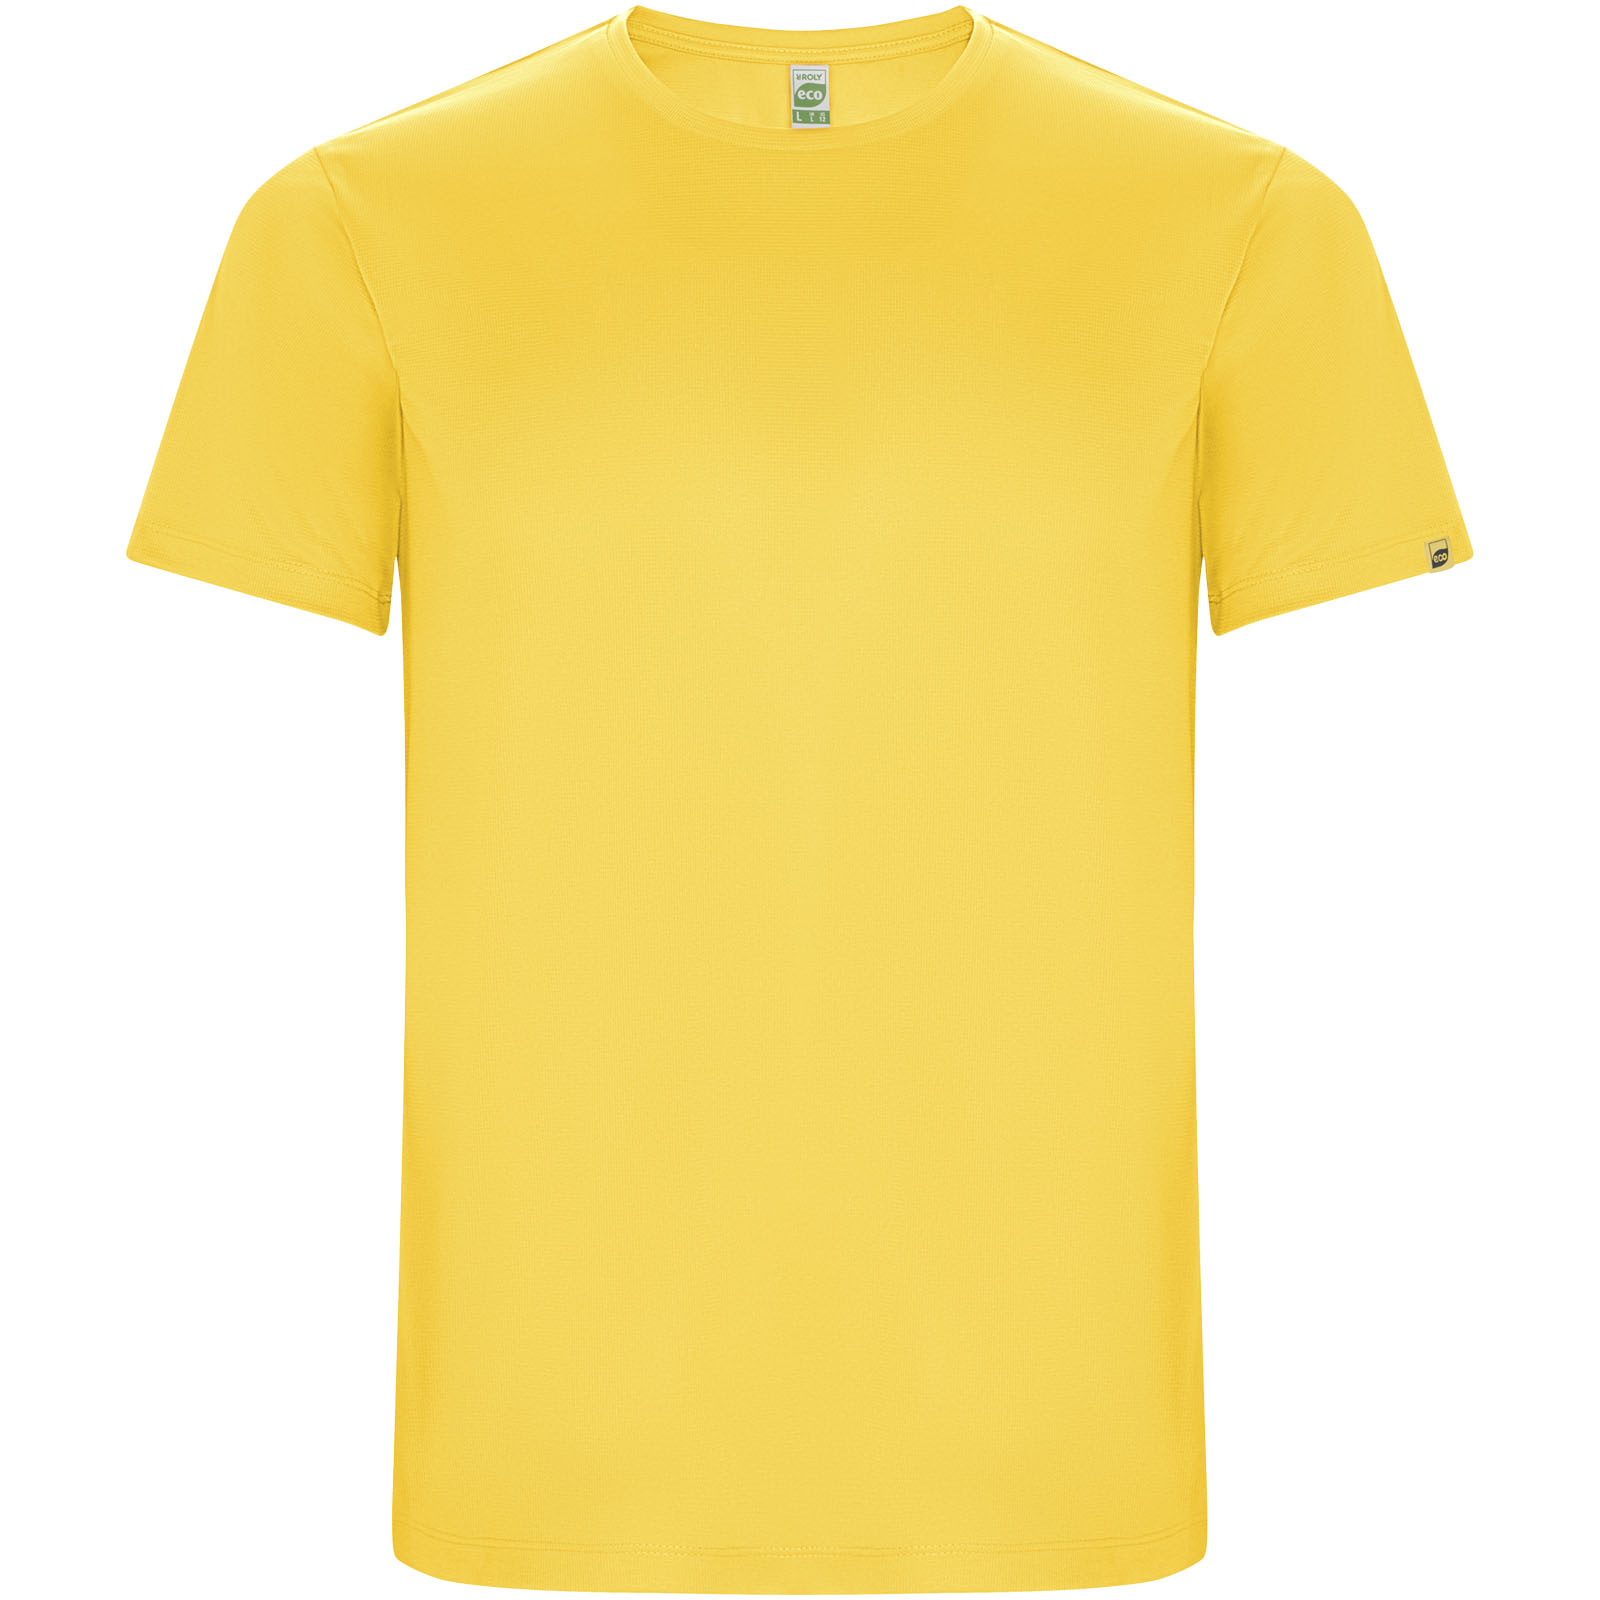 Imola Kurzarm-Sport-T-Shirt für Kinder - Storkow 